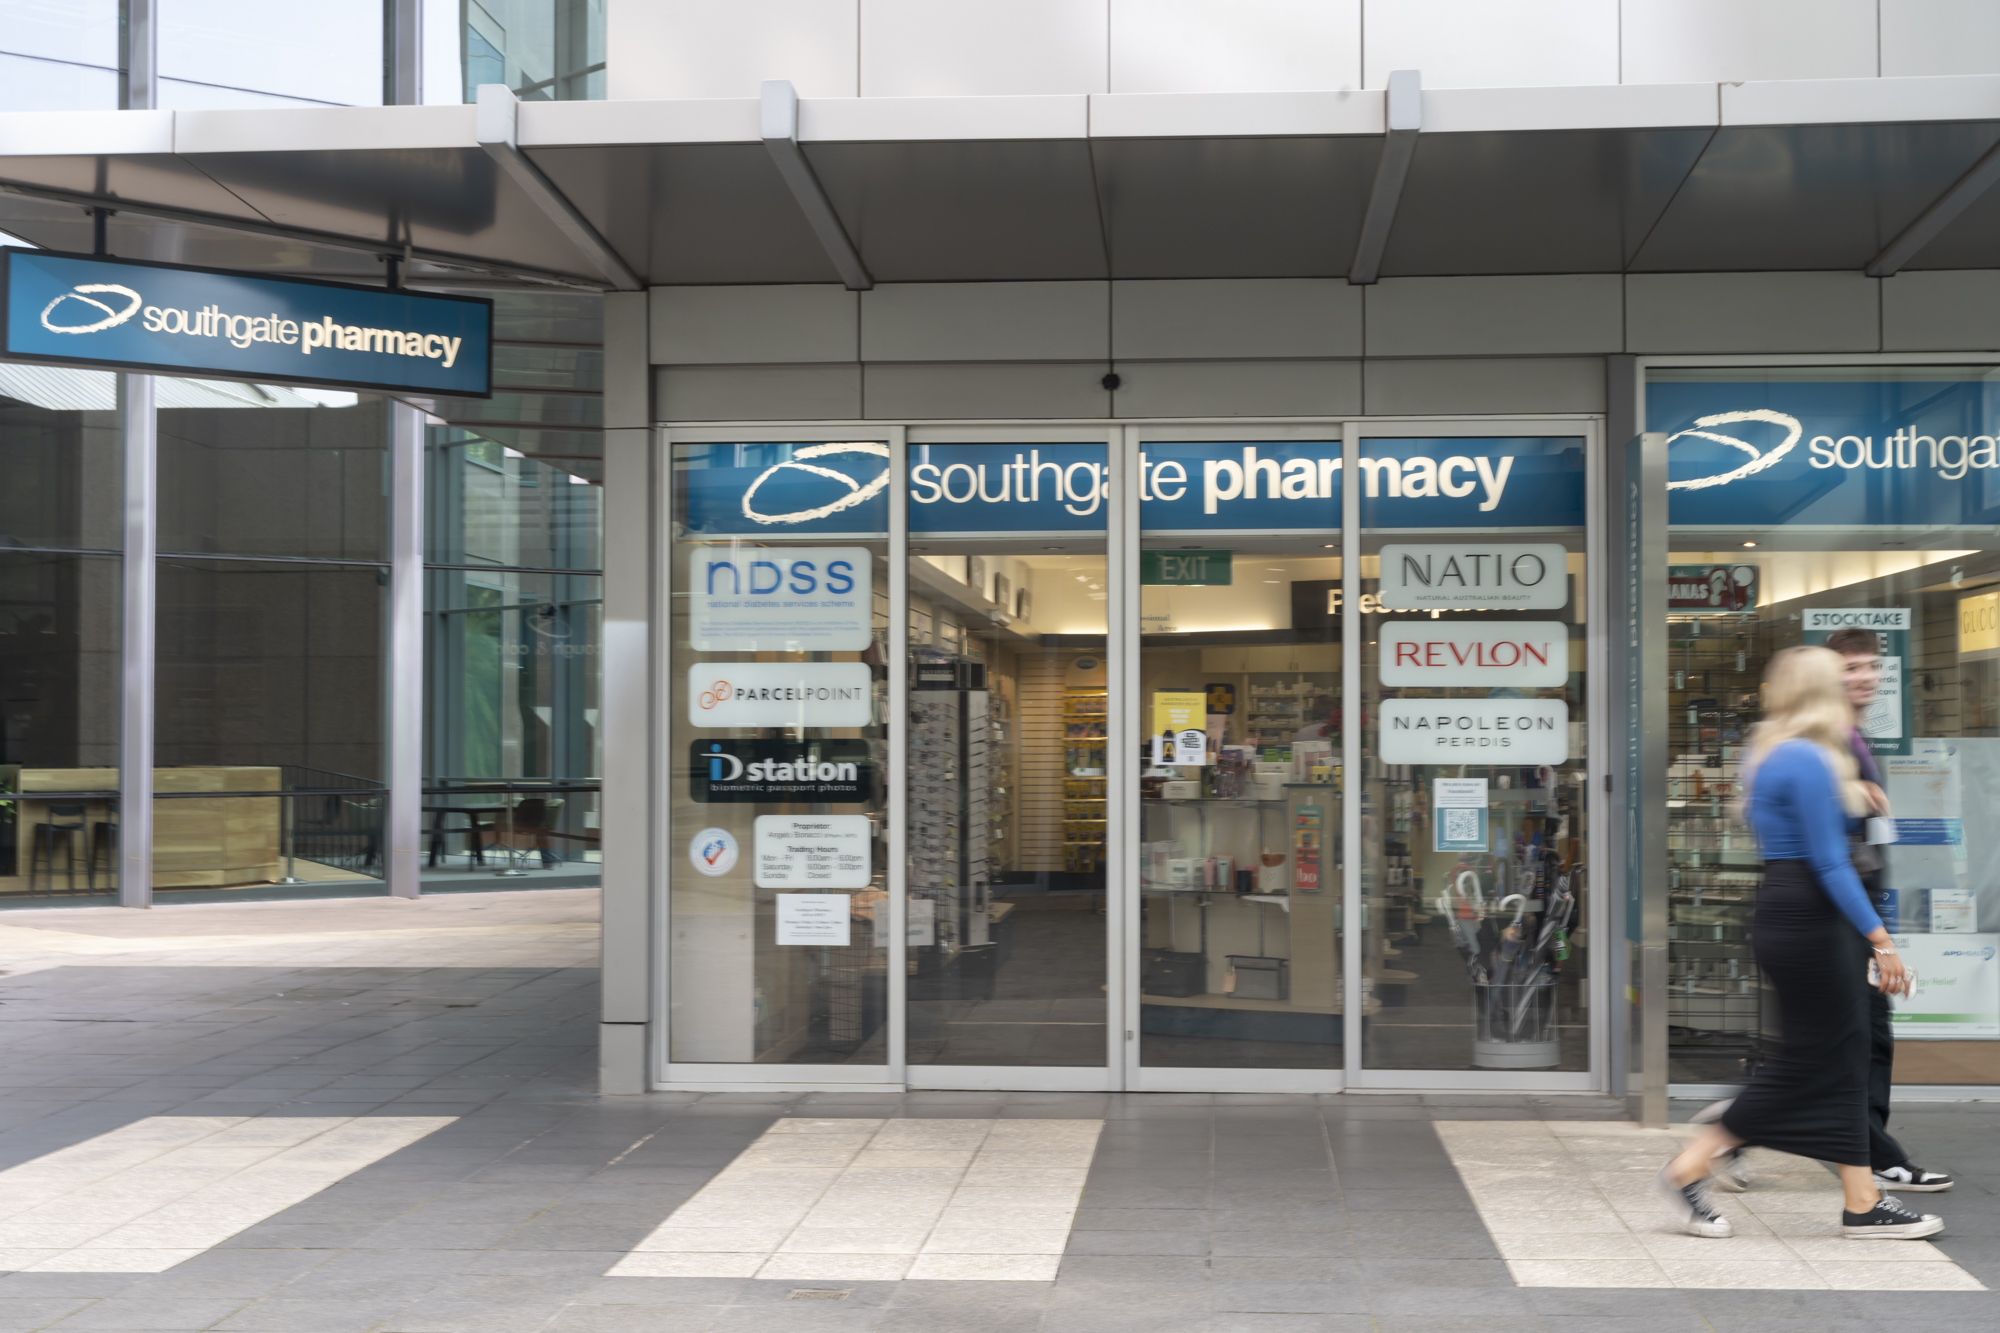 Southgate Pharmacy